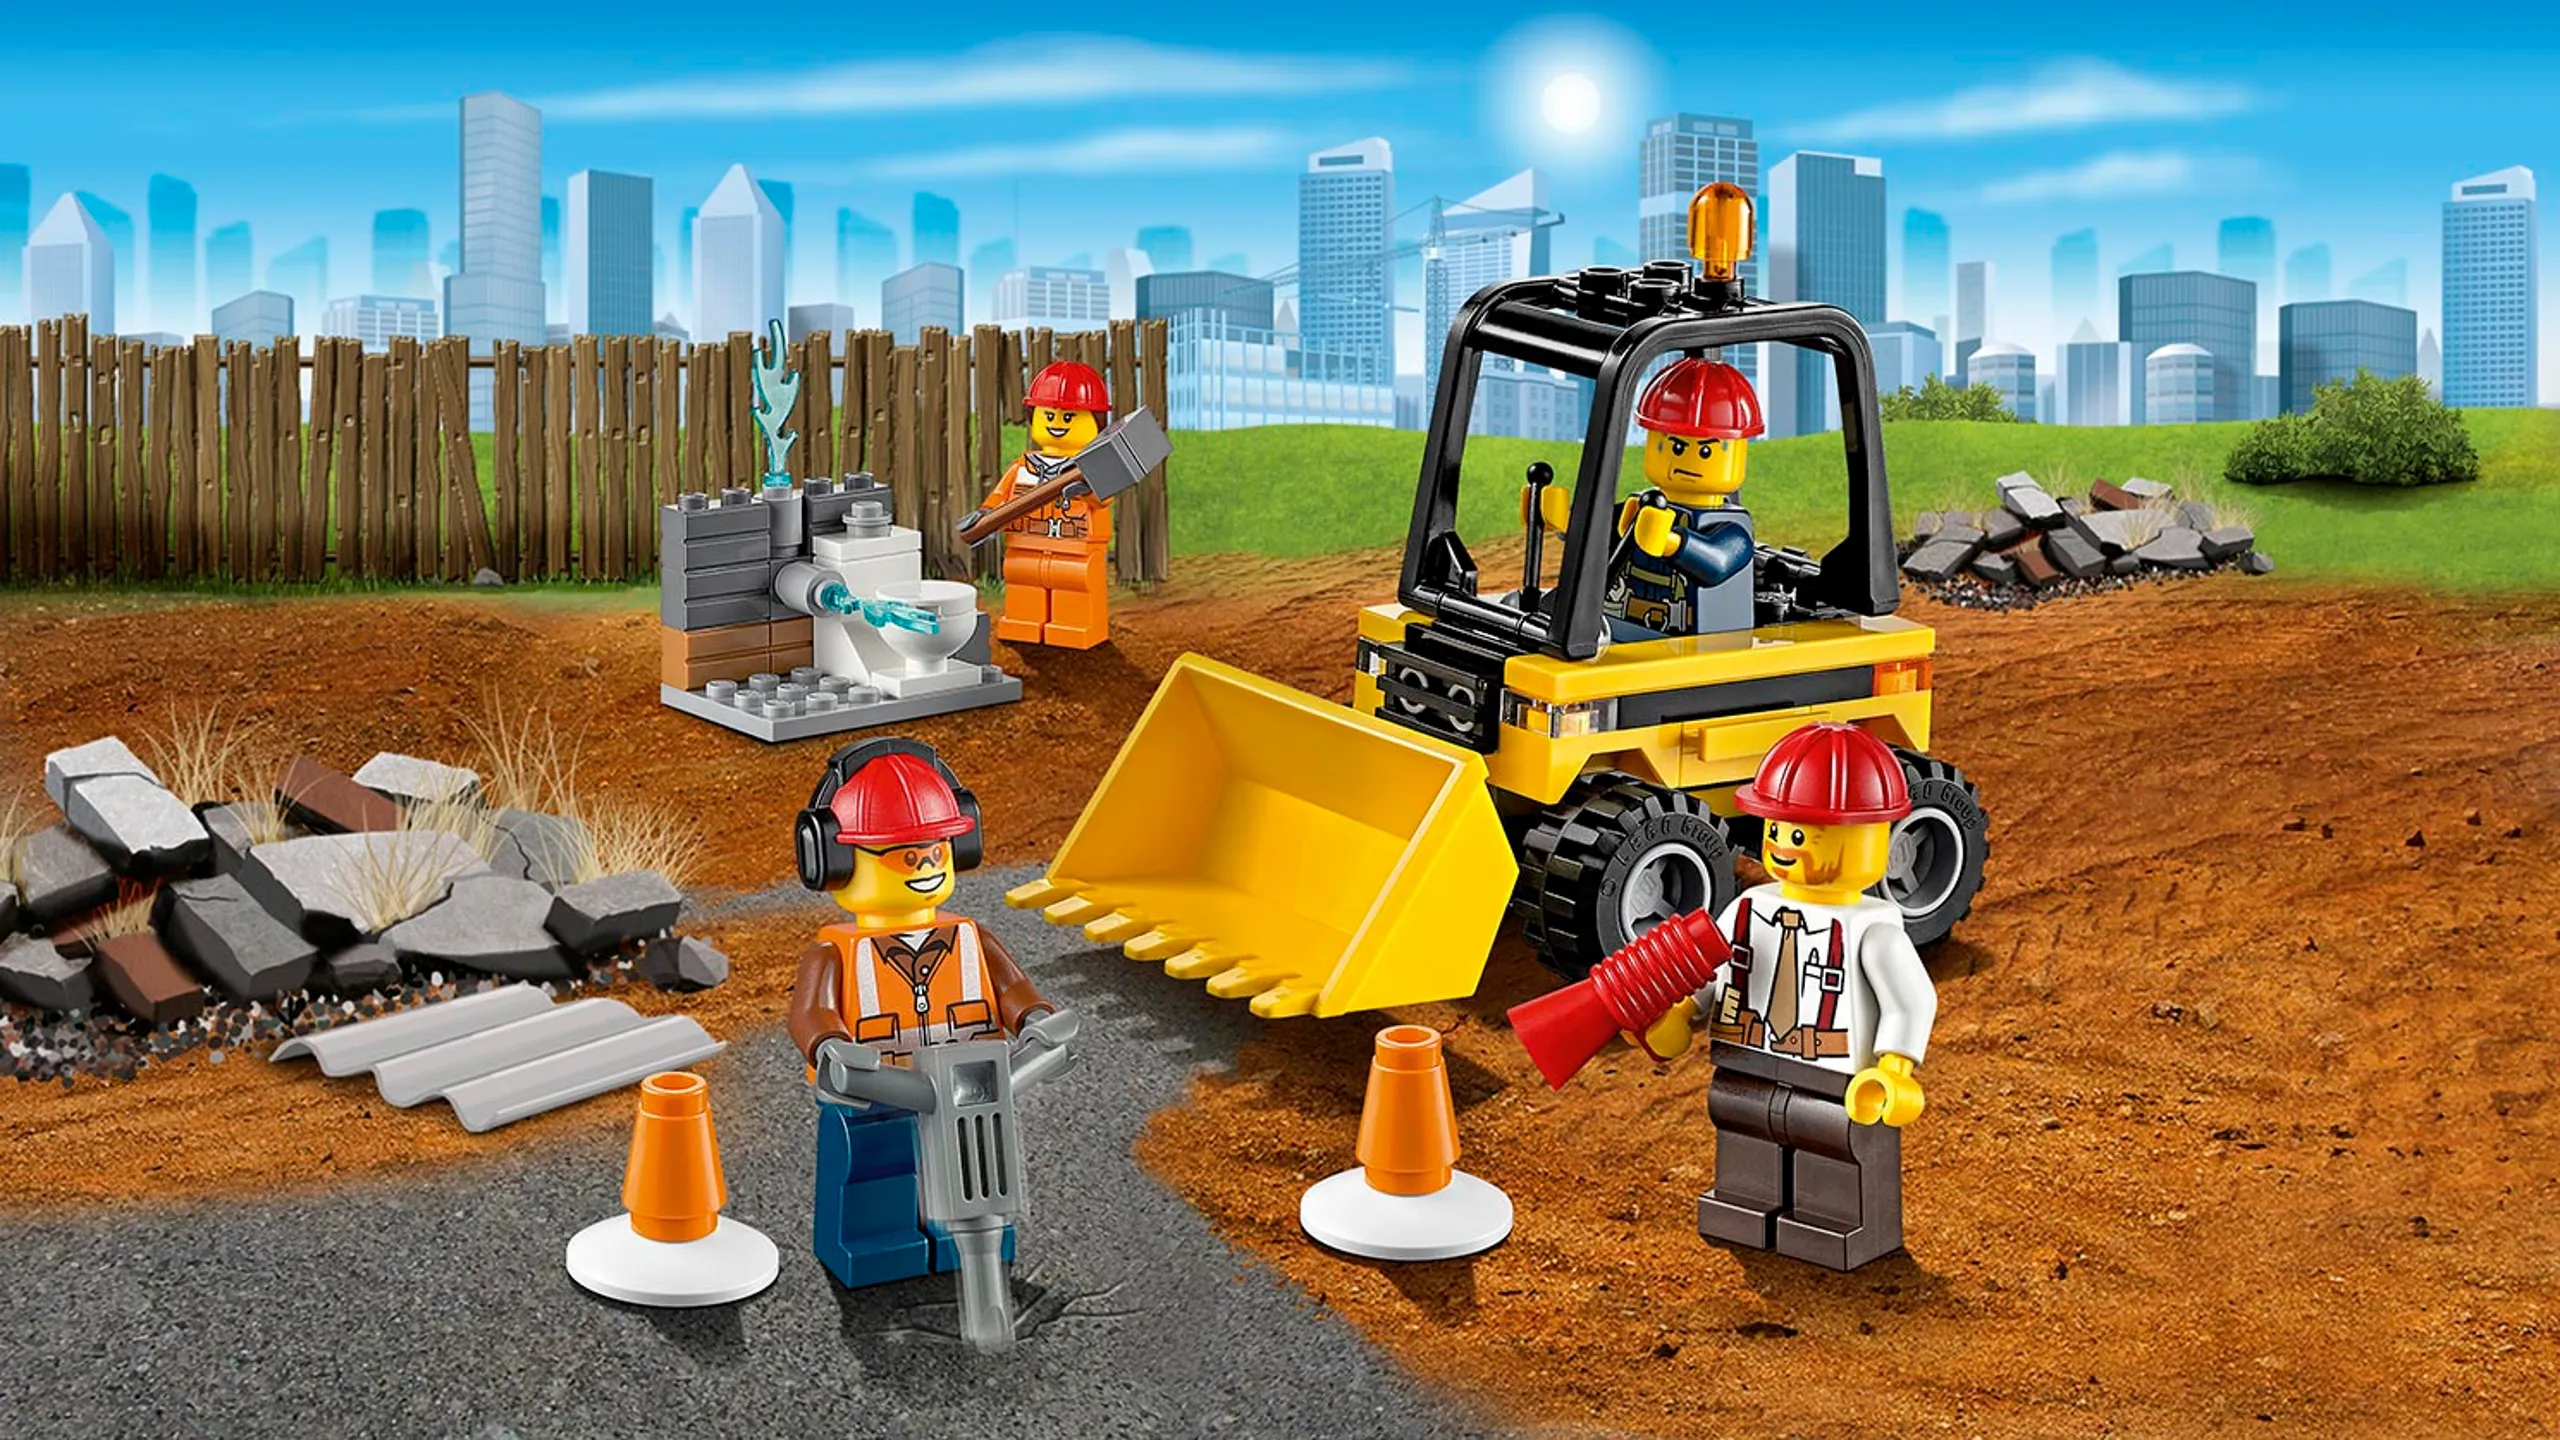 LEGO City Demolition crew minifigures and bulldozer - Demolition Starter Set 60072